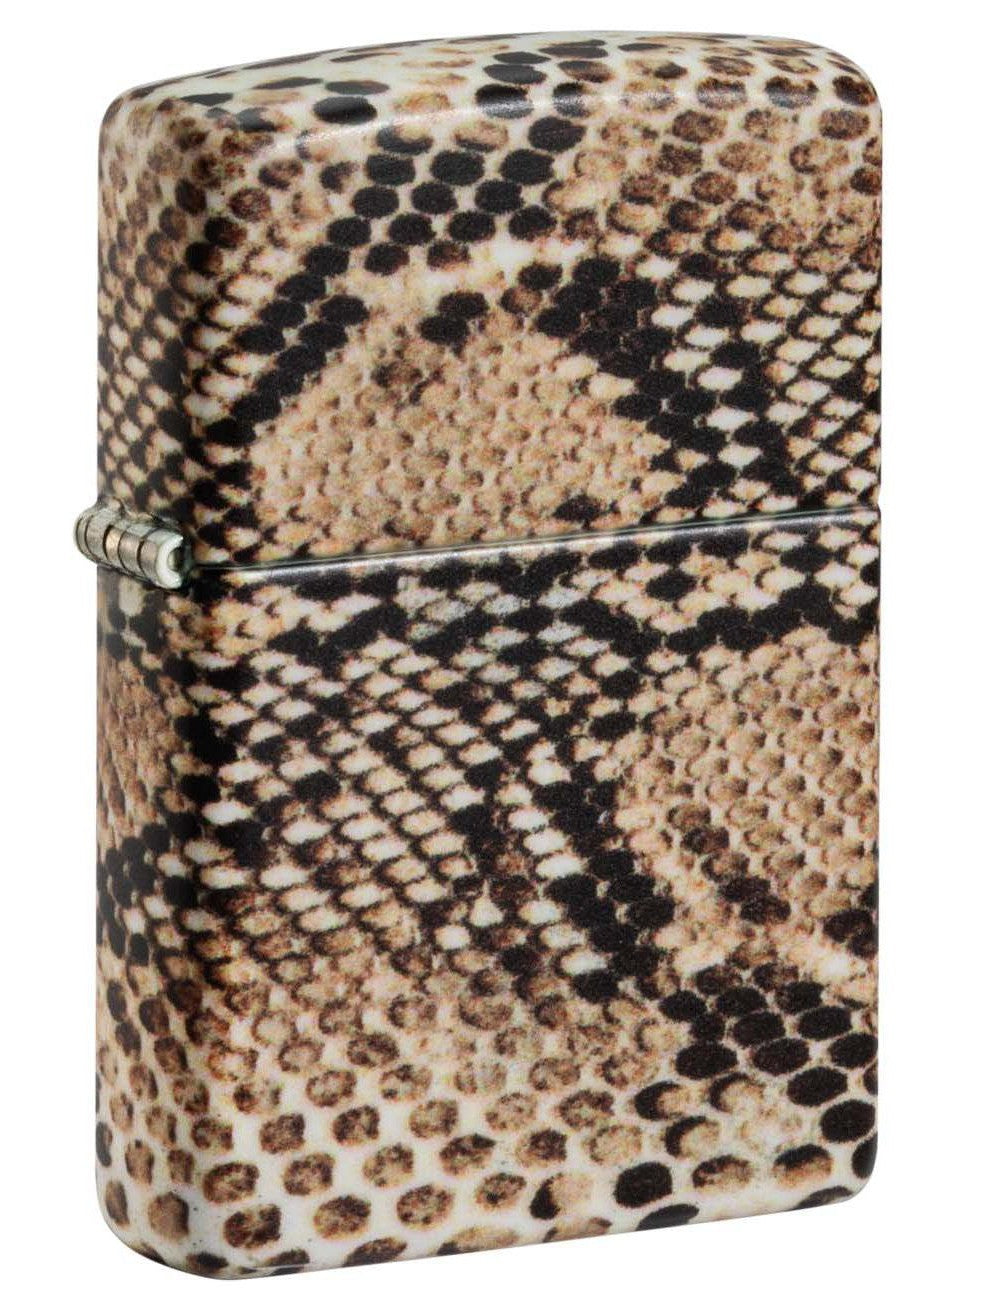 Zippo Lighter: Snake Skin Print - 540 Color 48256